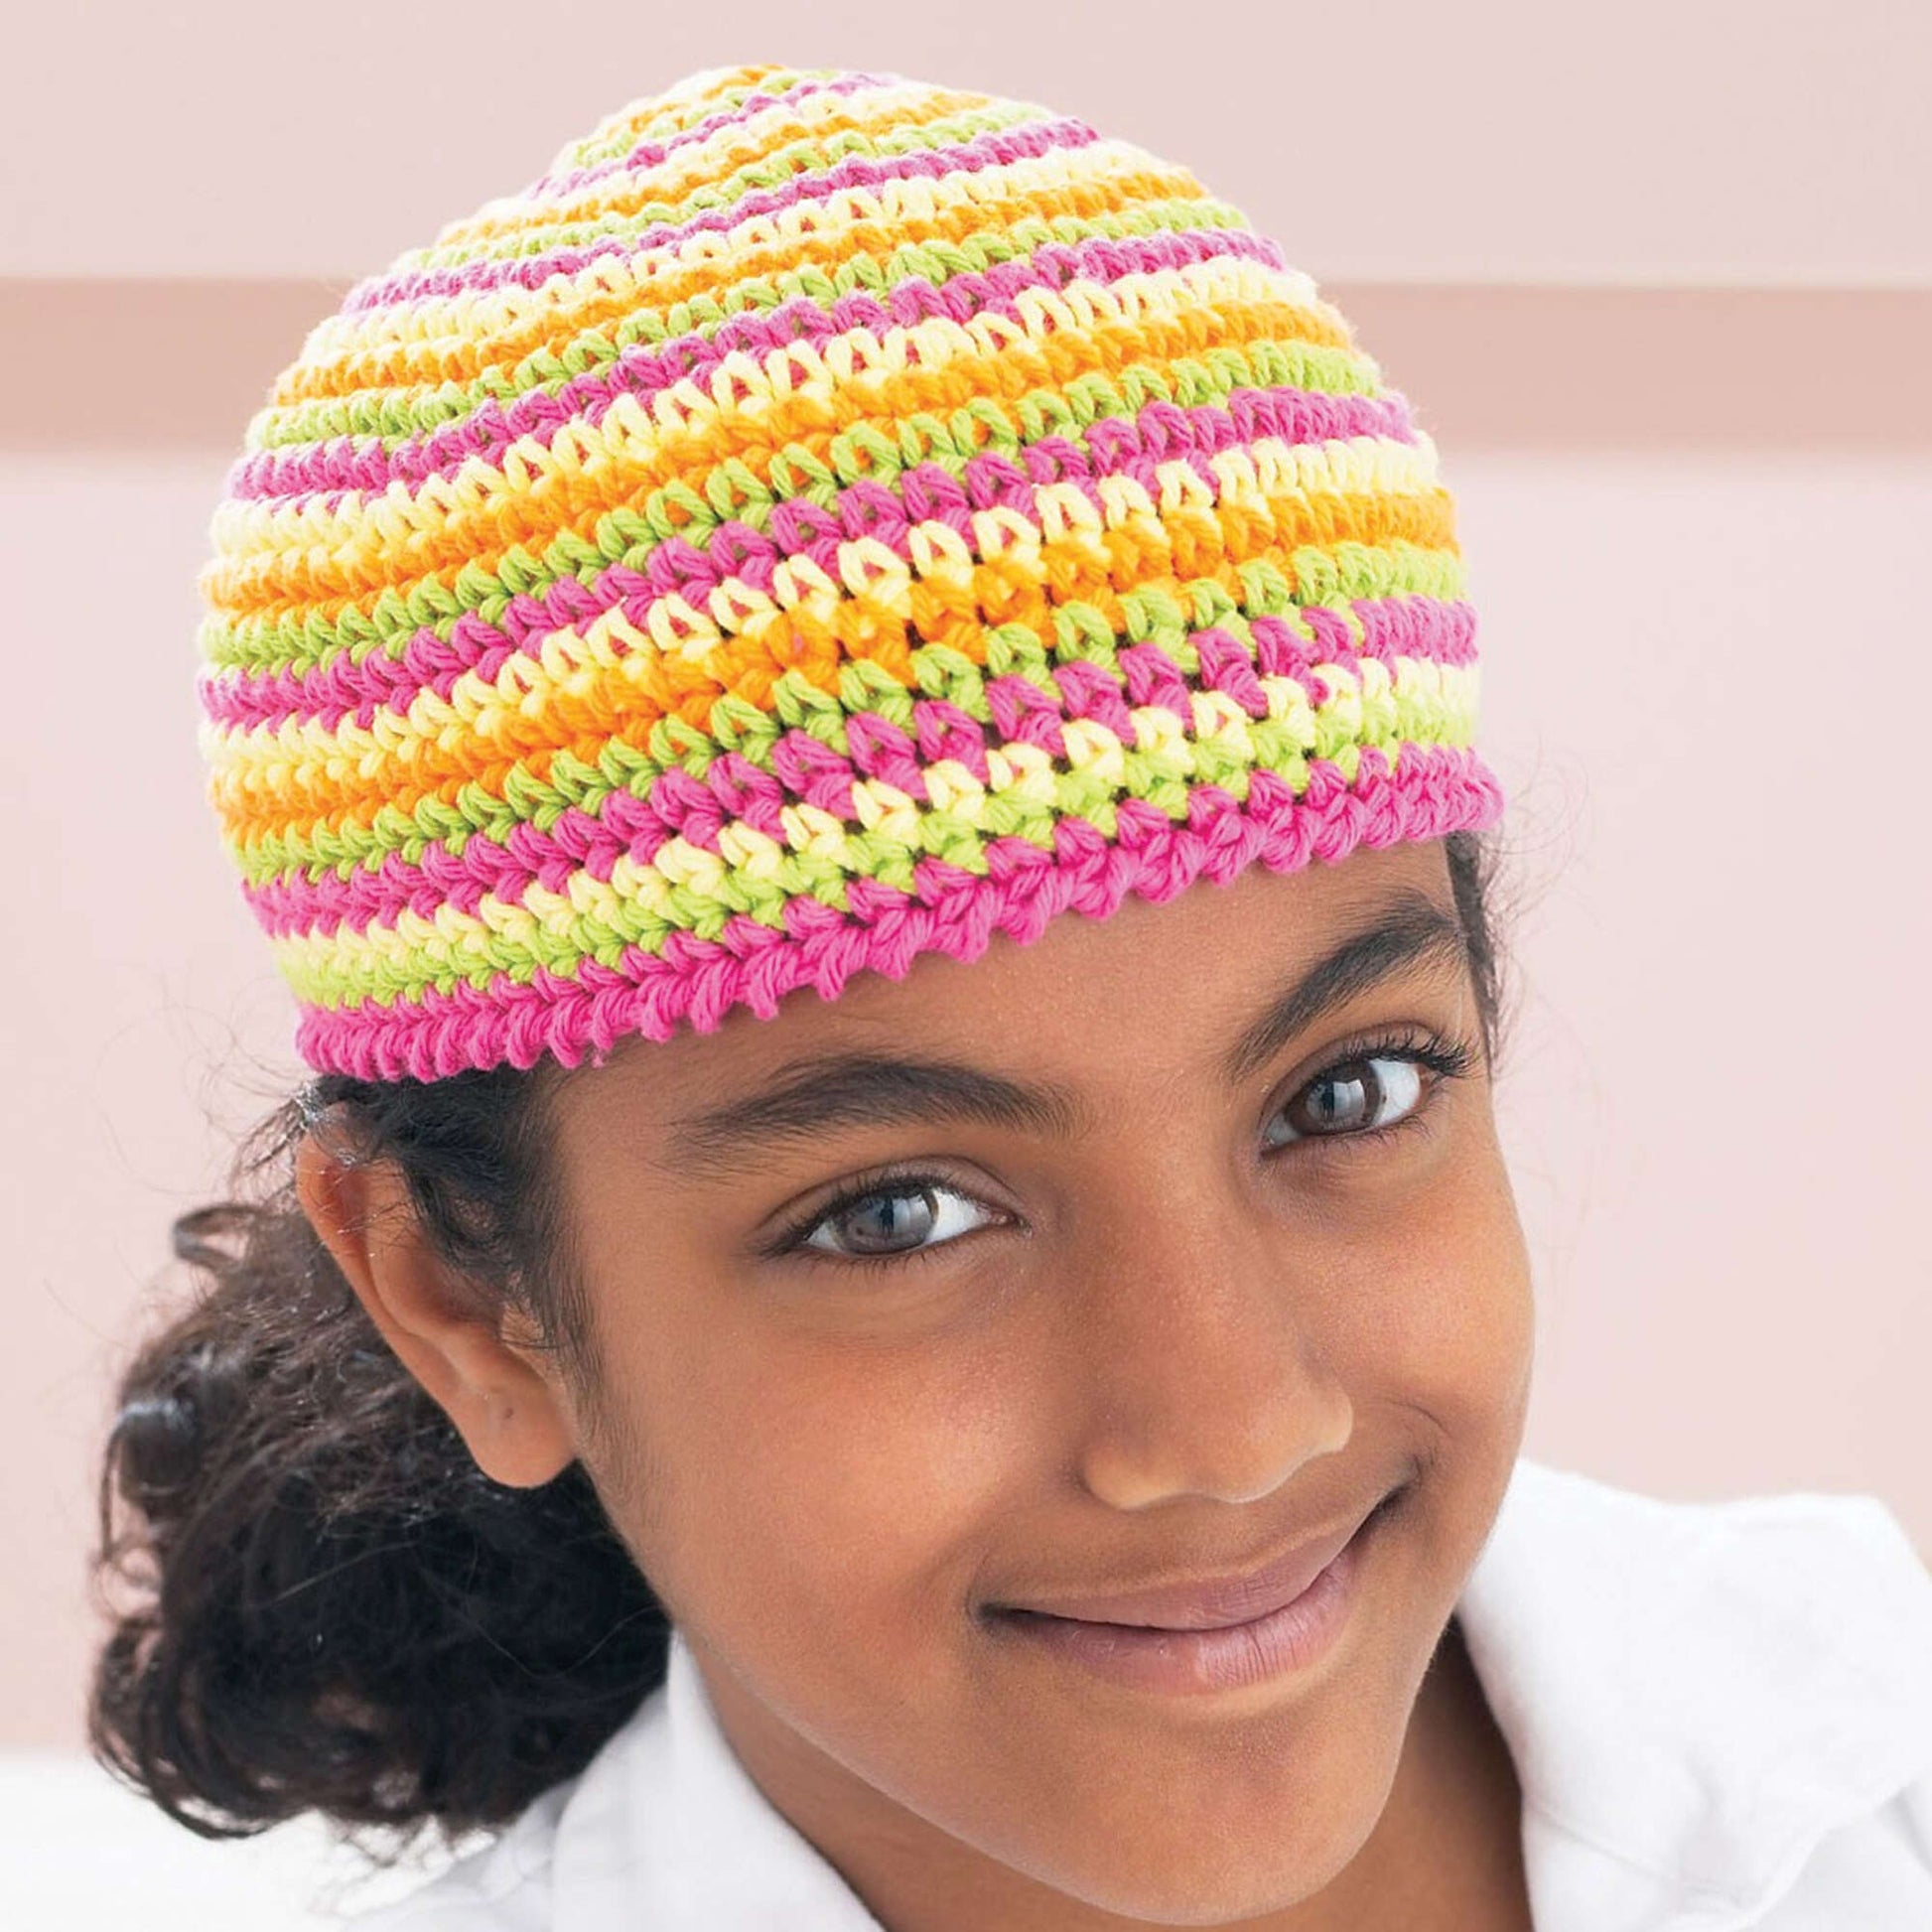 Free Lily Sugar 'n Cream Cool Caps Crochet Pattern